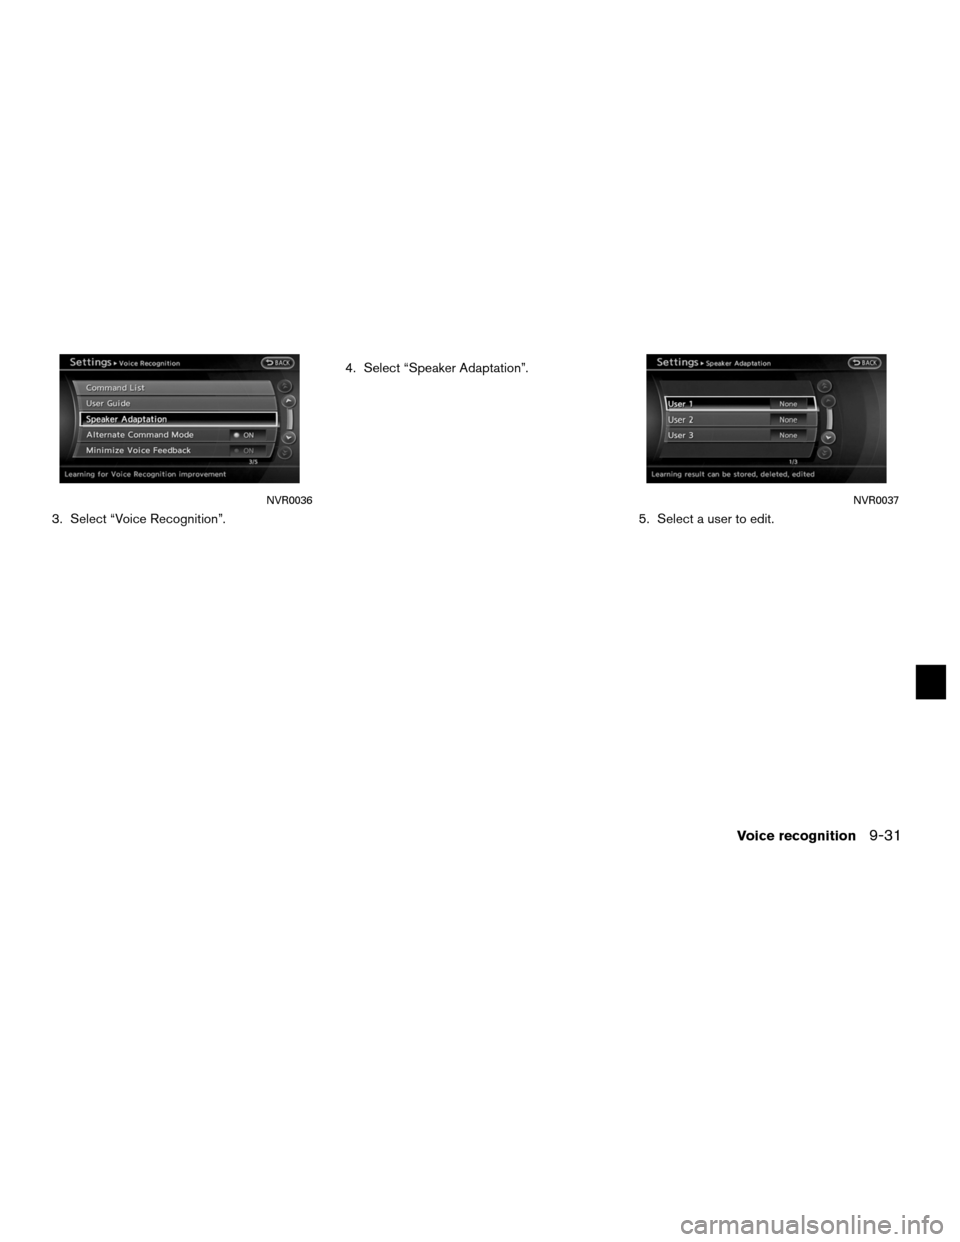 NISSAN ALTIMA COUPE 2012 D32 / 4.G Navigation Manual 3. Select “Voice Recognition”.4. Select “Speaker Adaptation”.
5. Select a user to edit.
NVR0036NVR0037
Voice recognition9-31 